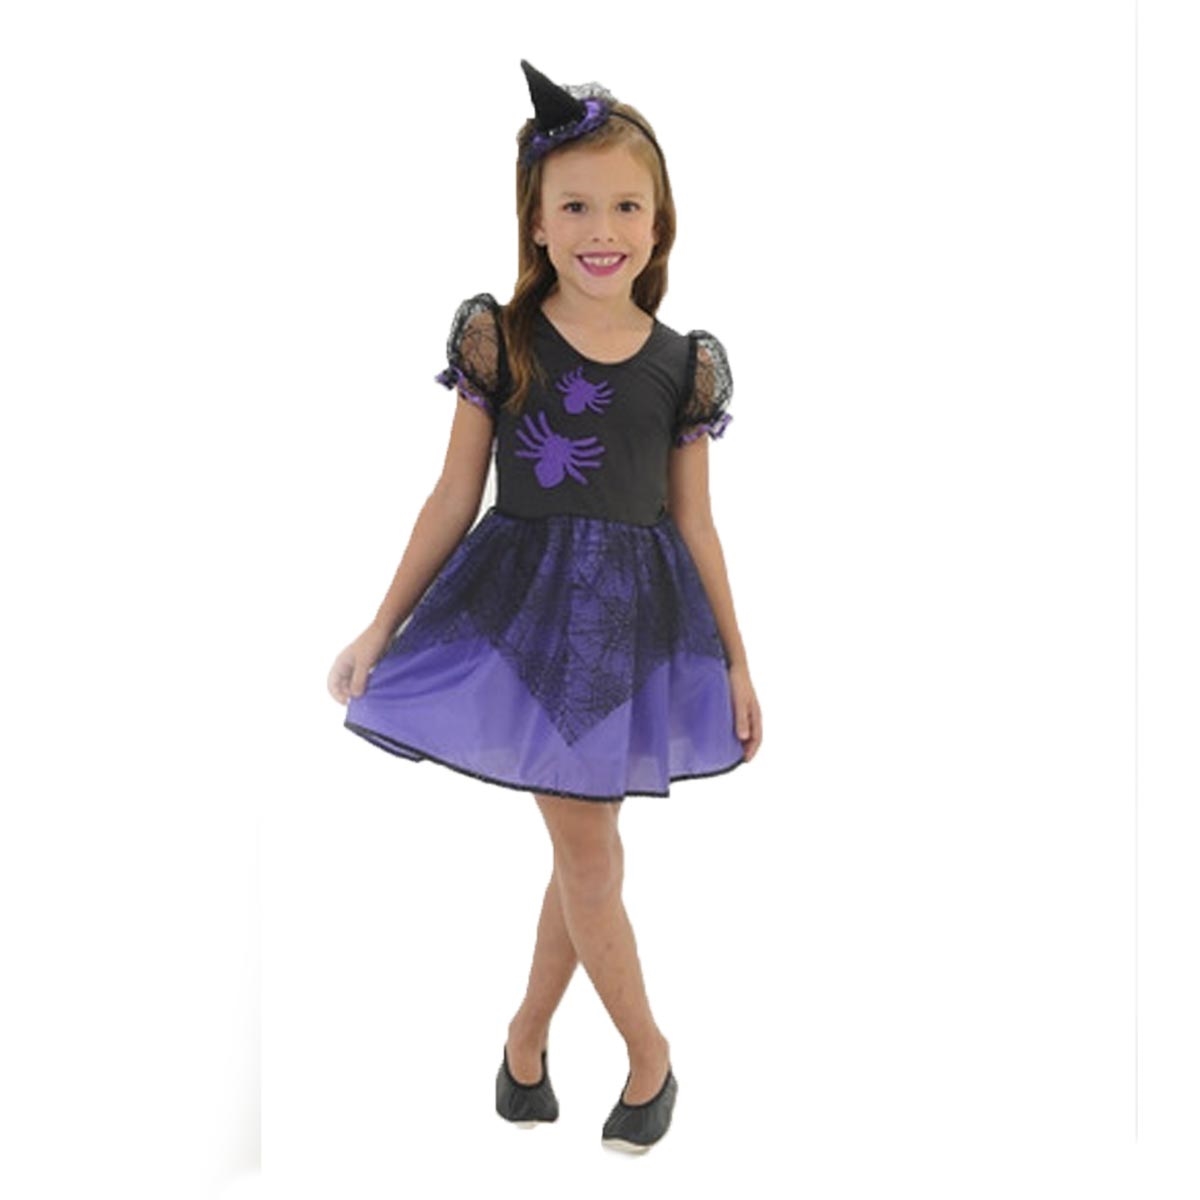 Fantasia Bruxa Infantil de Halloween Com Chapeu de Bruxa